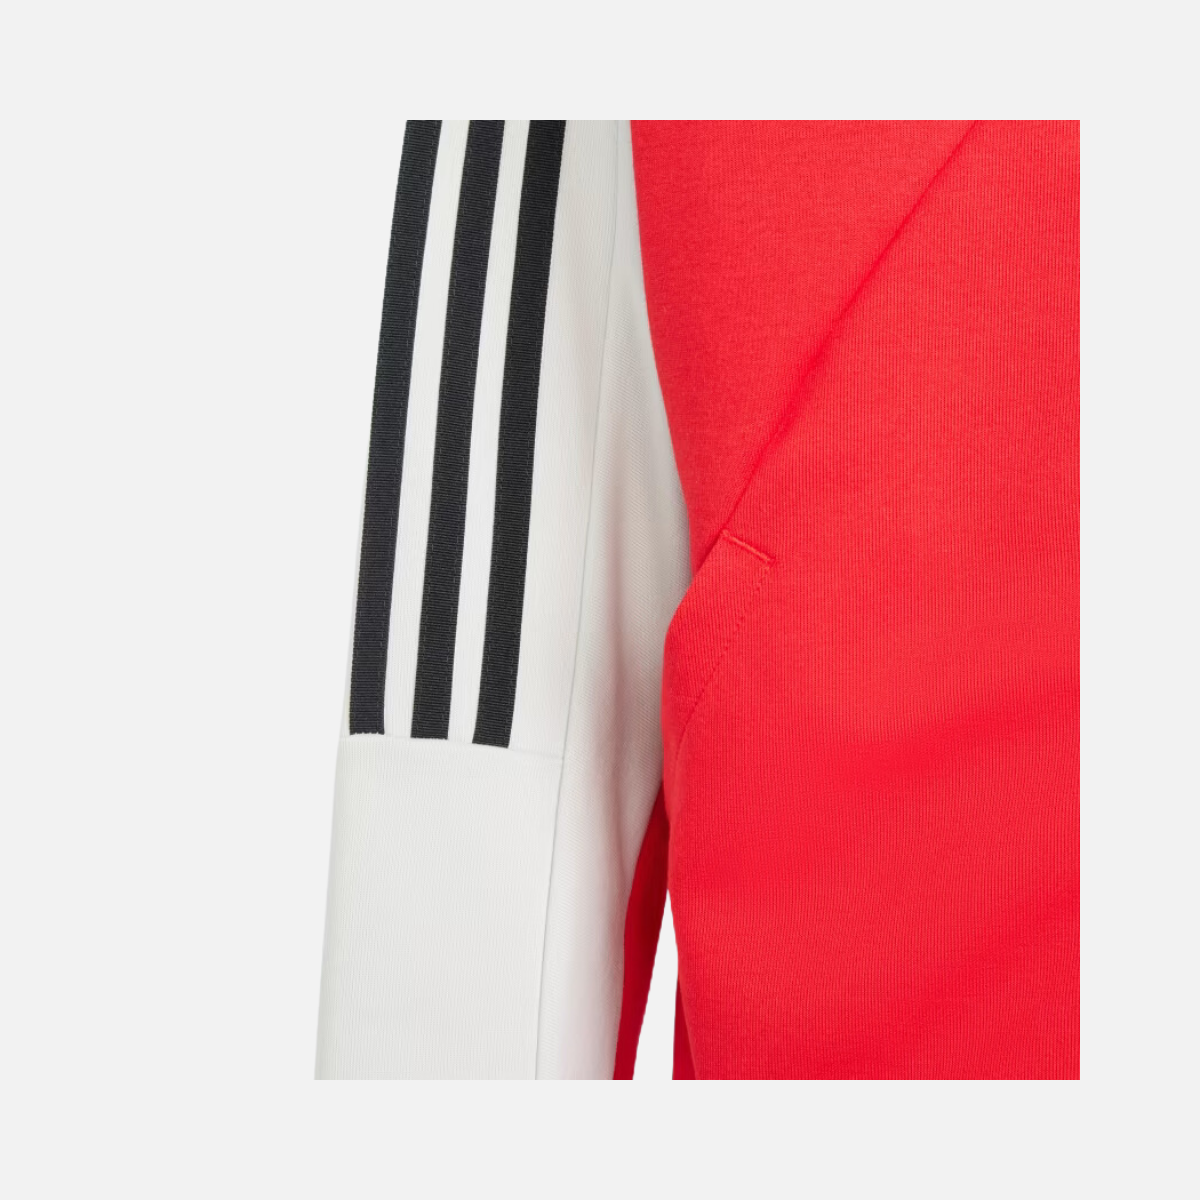 Adidas Tiro Track Kids Unisex Jacket (7-16 Years) -Grey One/Better Scarlet